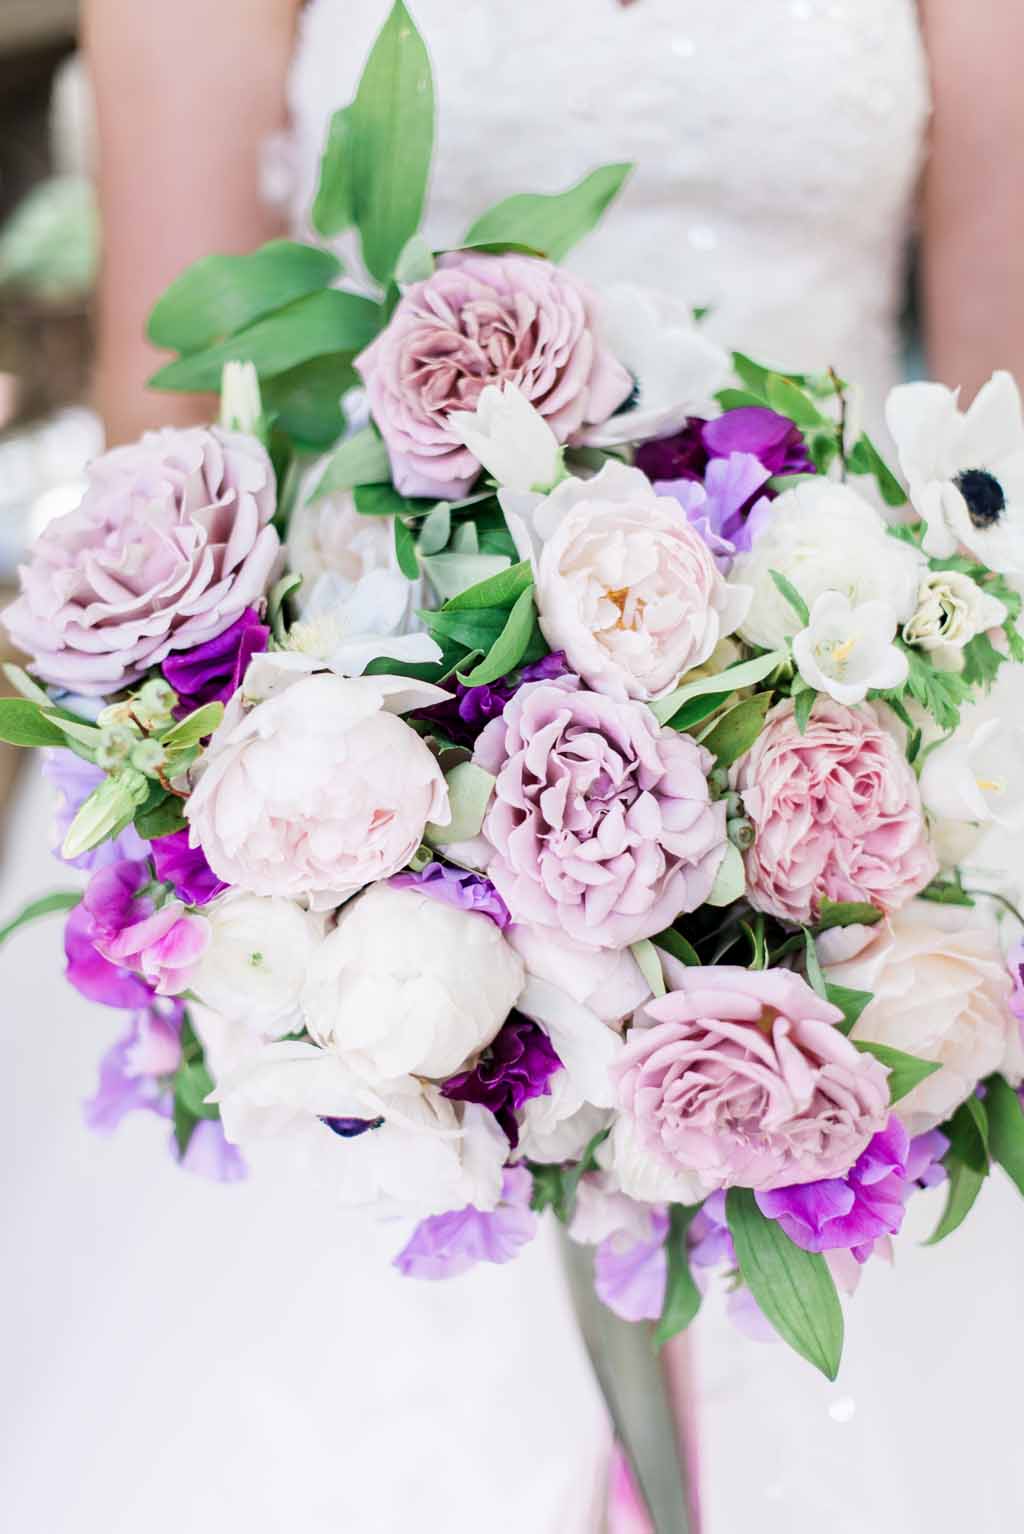 Bella Fiori Florist - Bella Luna Farms - Becca Jones Photography - Snohomish Washington - purple, lavender, white bridal bouquet with garden roses, sweet peas and anemones